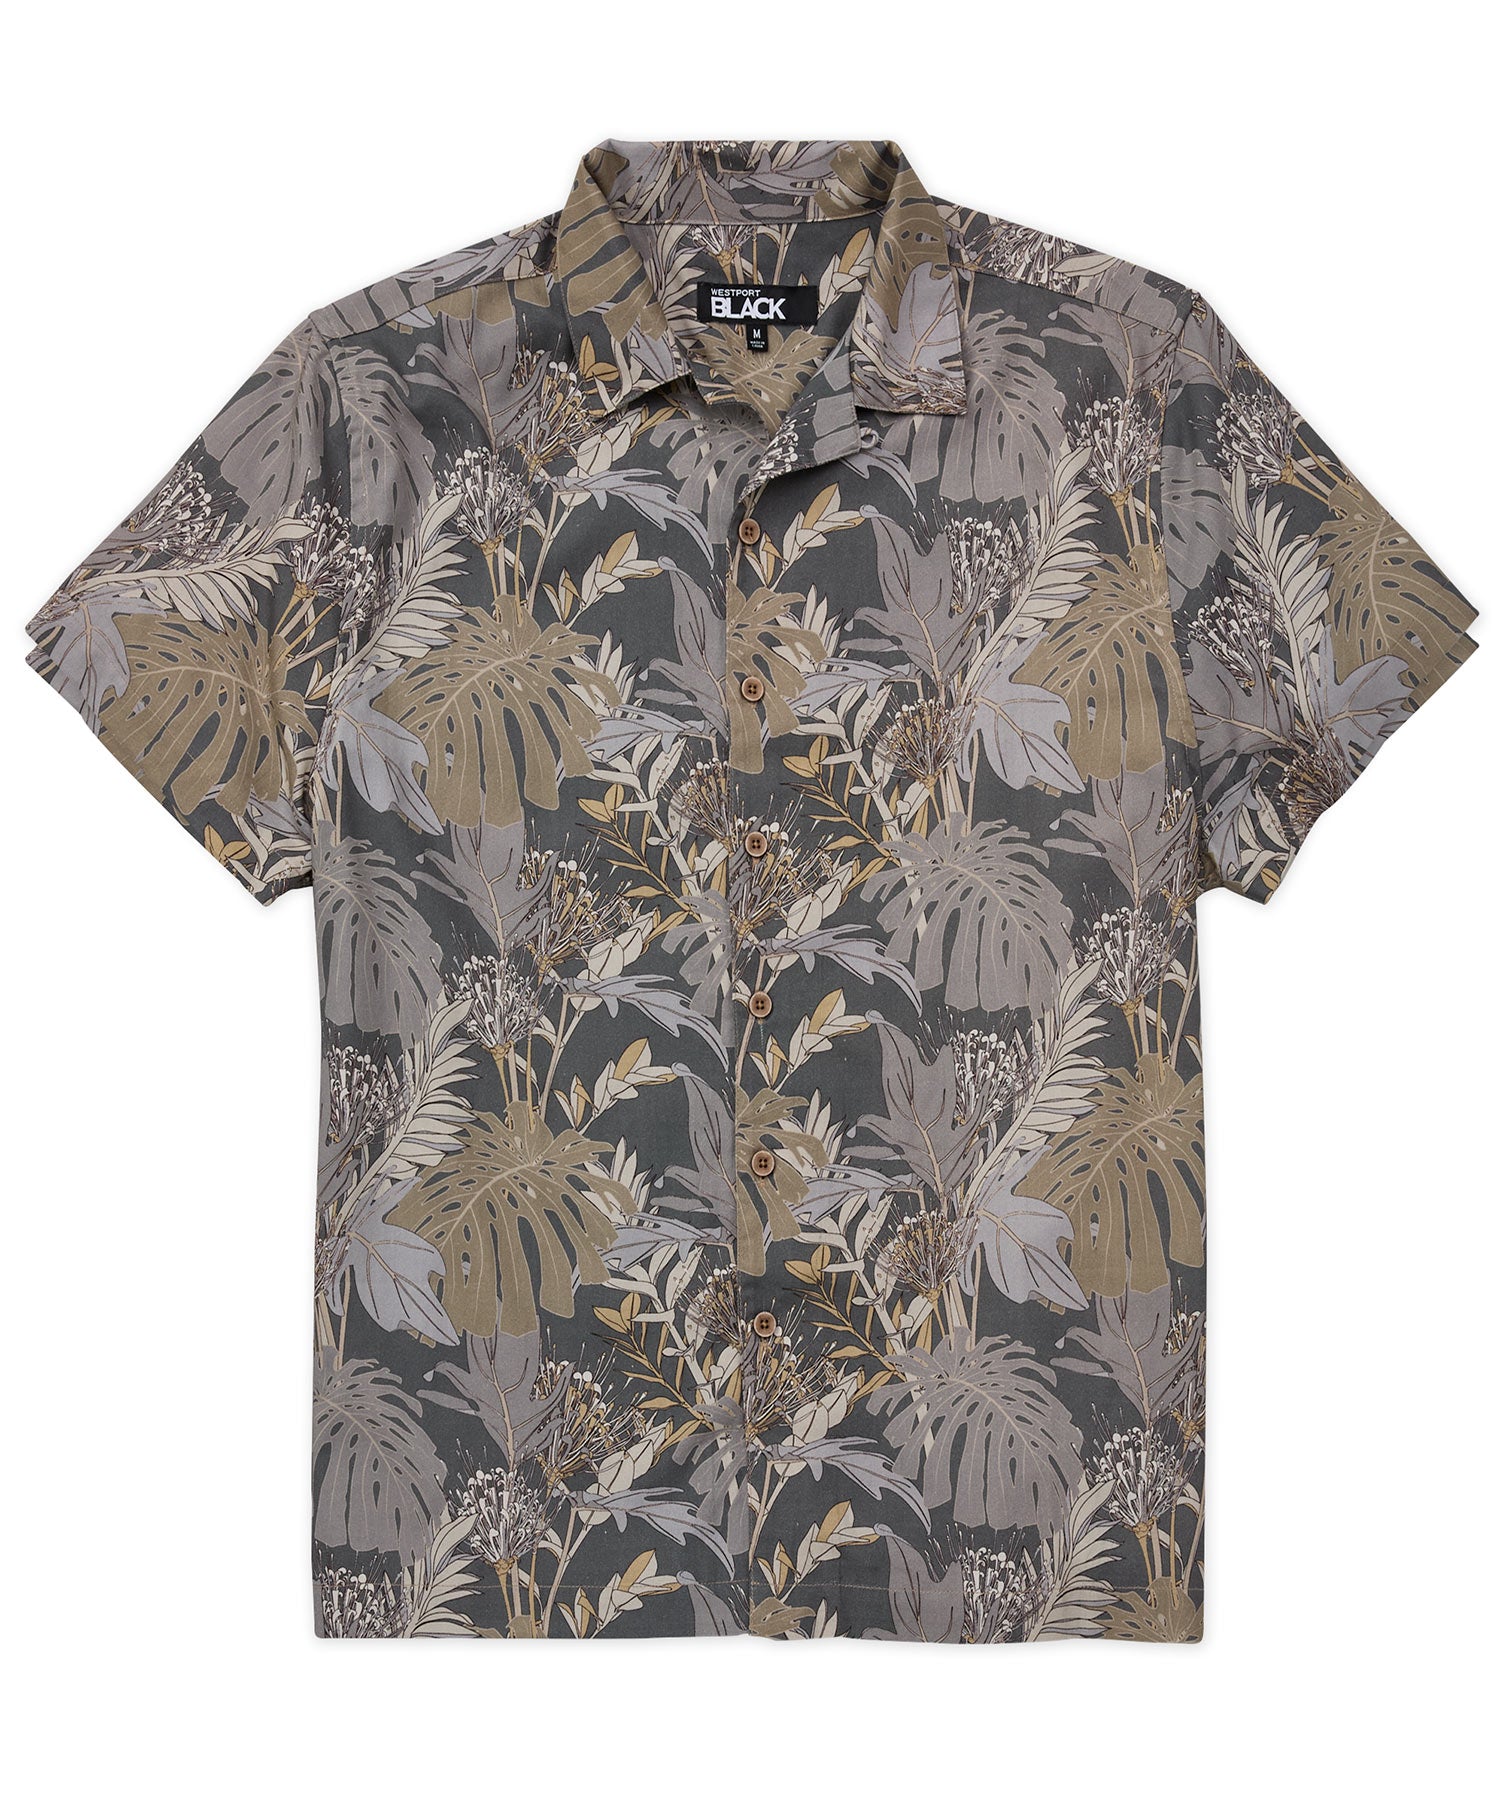 Westport Black Short Sleeve Hibiscus Print Sport Shirt, Men's Big & Tall